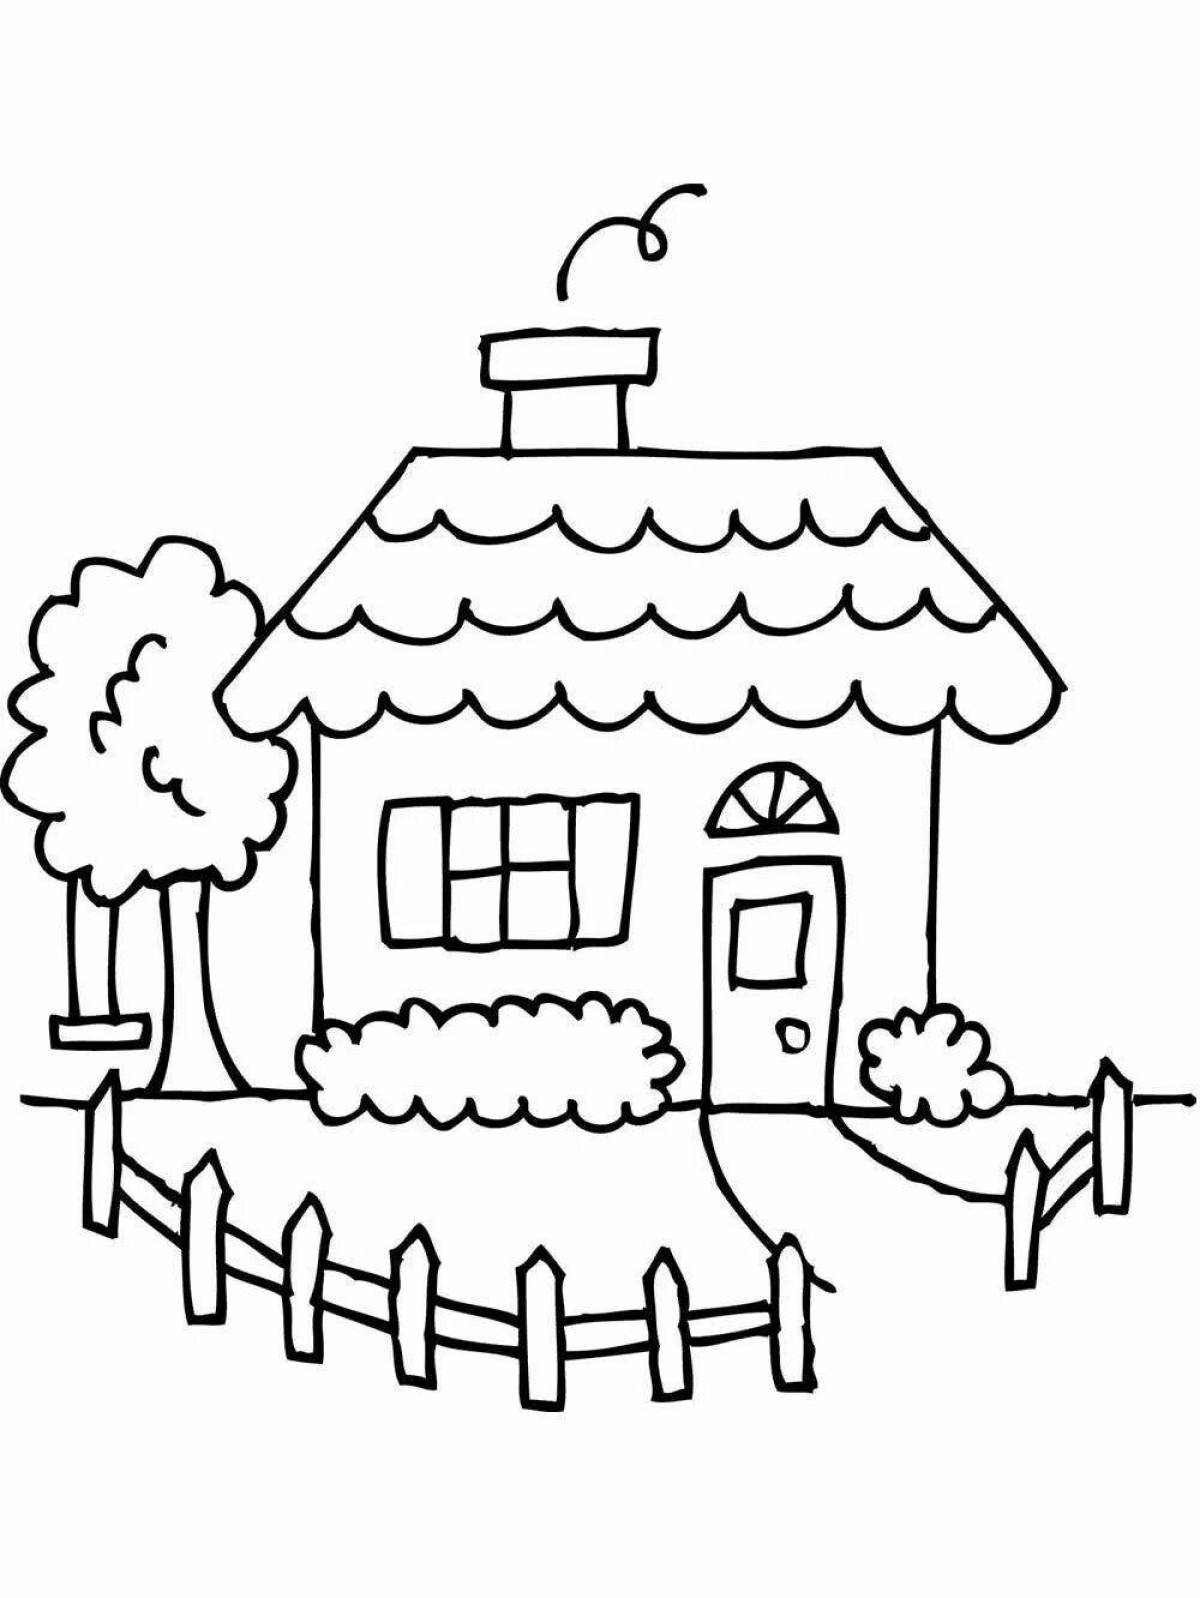 Joyful house coloring page